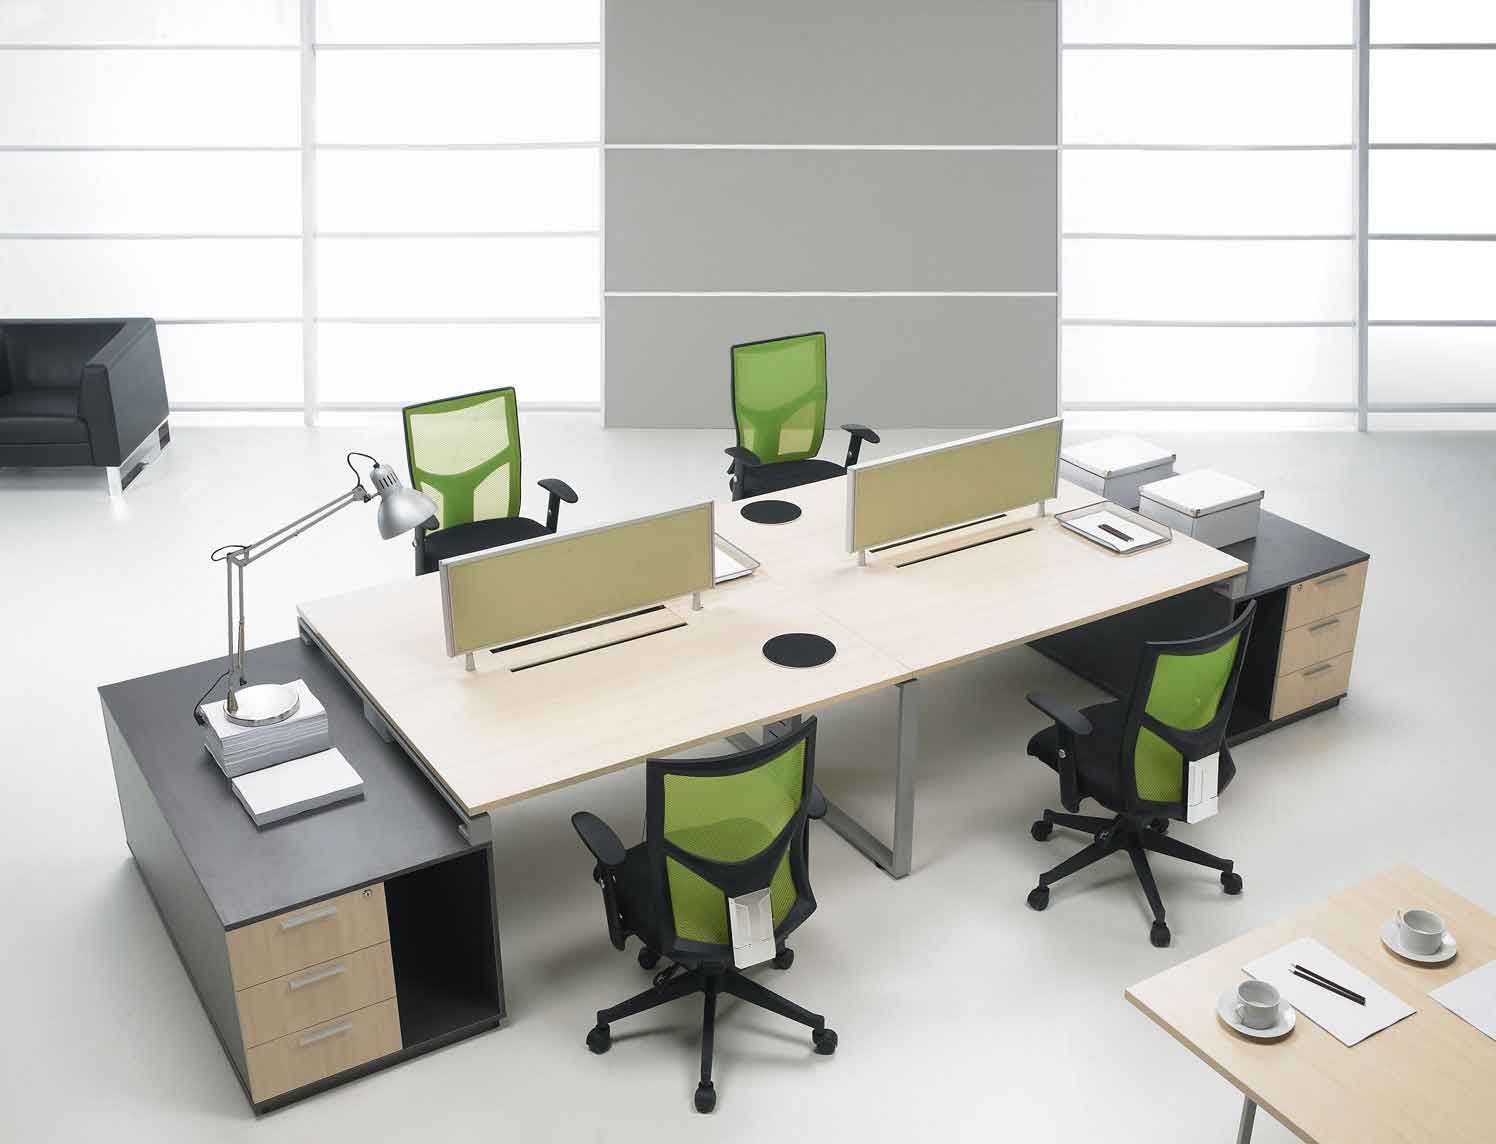 IZY - Office Workstation - Open Concept Desking System - 4 Pax Station - A